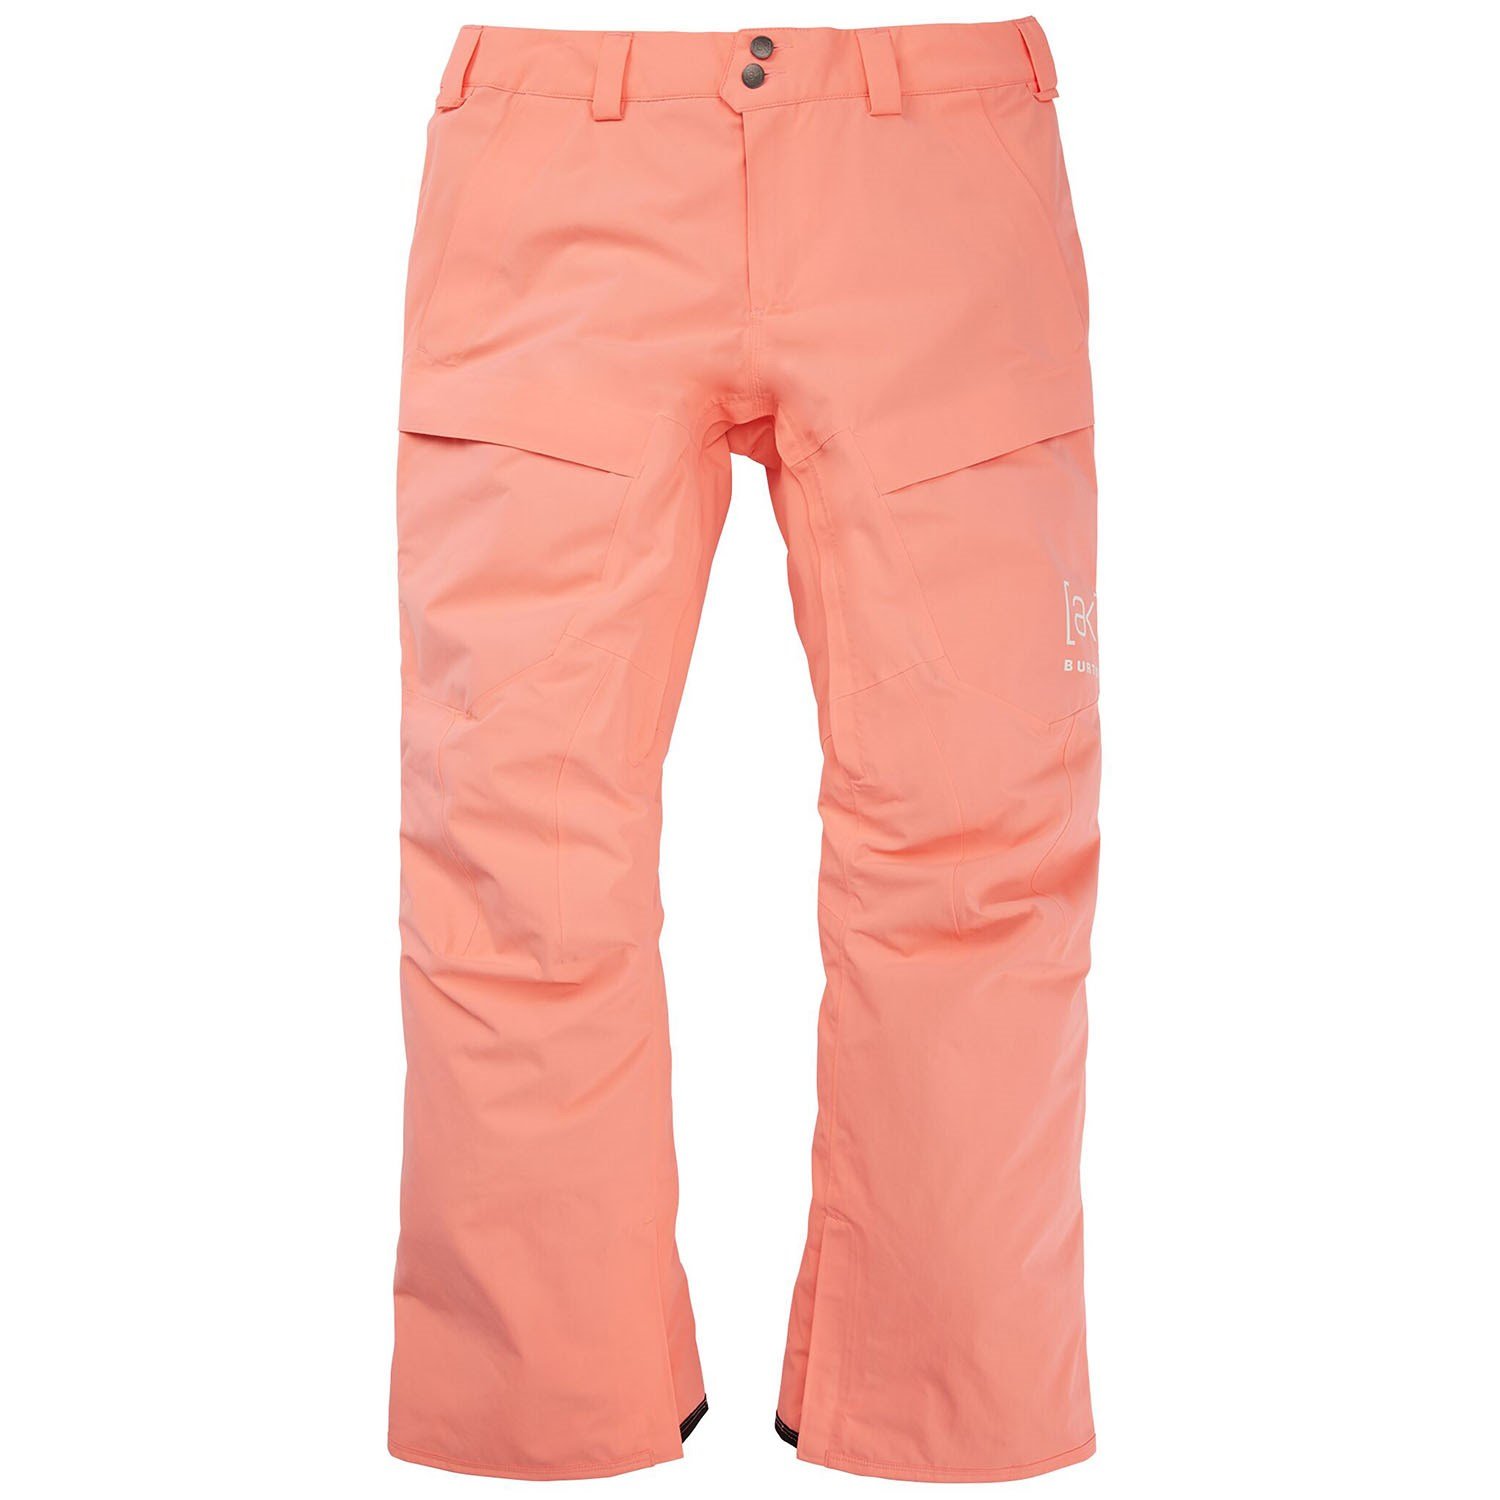 Брюки Burton AK 2L GORE-TEX Swash, цвет Reef Pink брюки burton ak 2l gore tex summit цвет reef pink